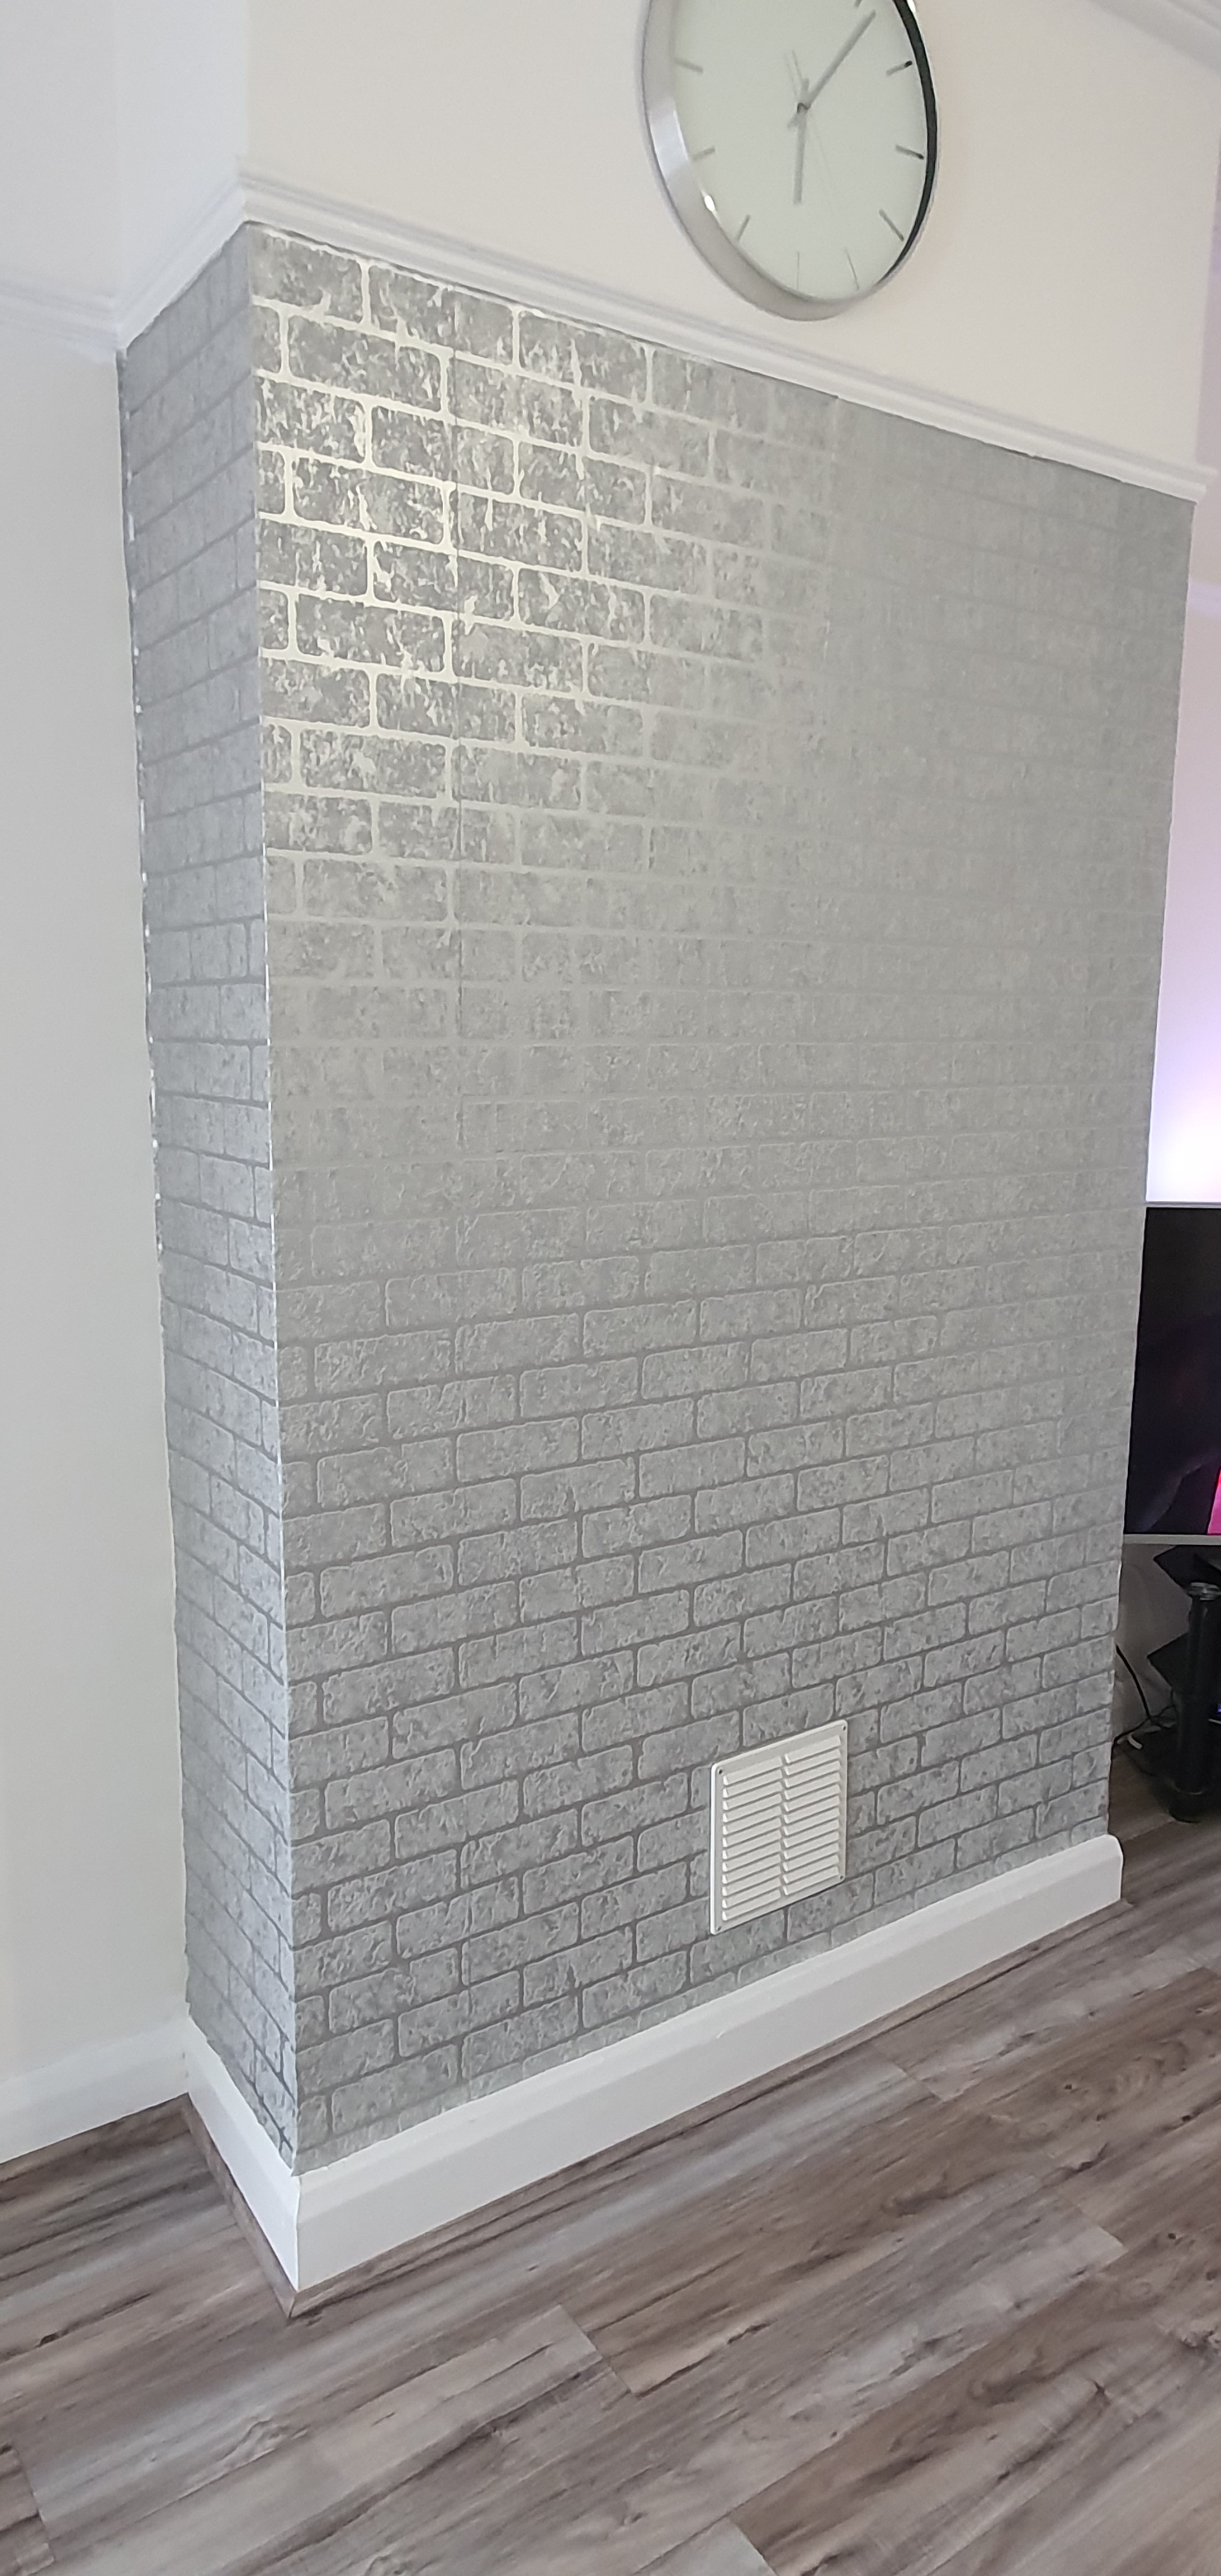 Superfresco Milan Brick Silver Wallpaper 106523